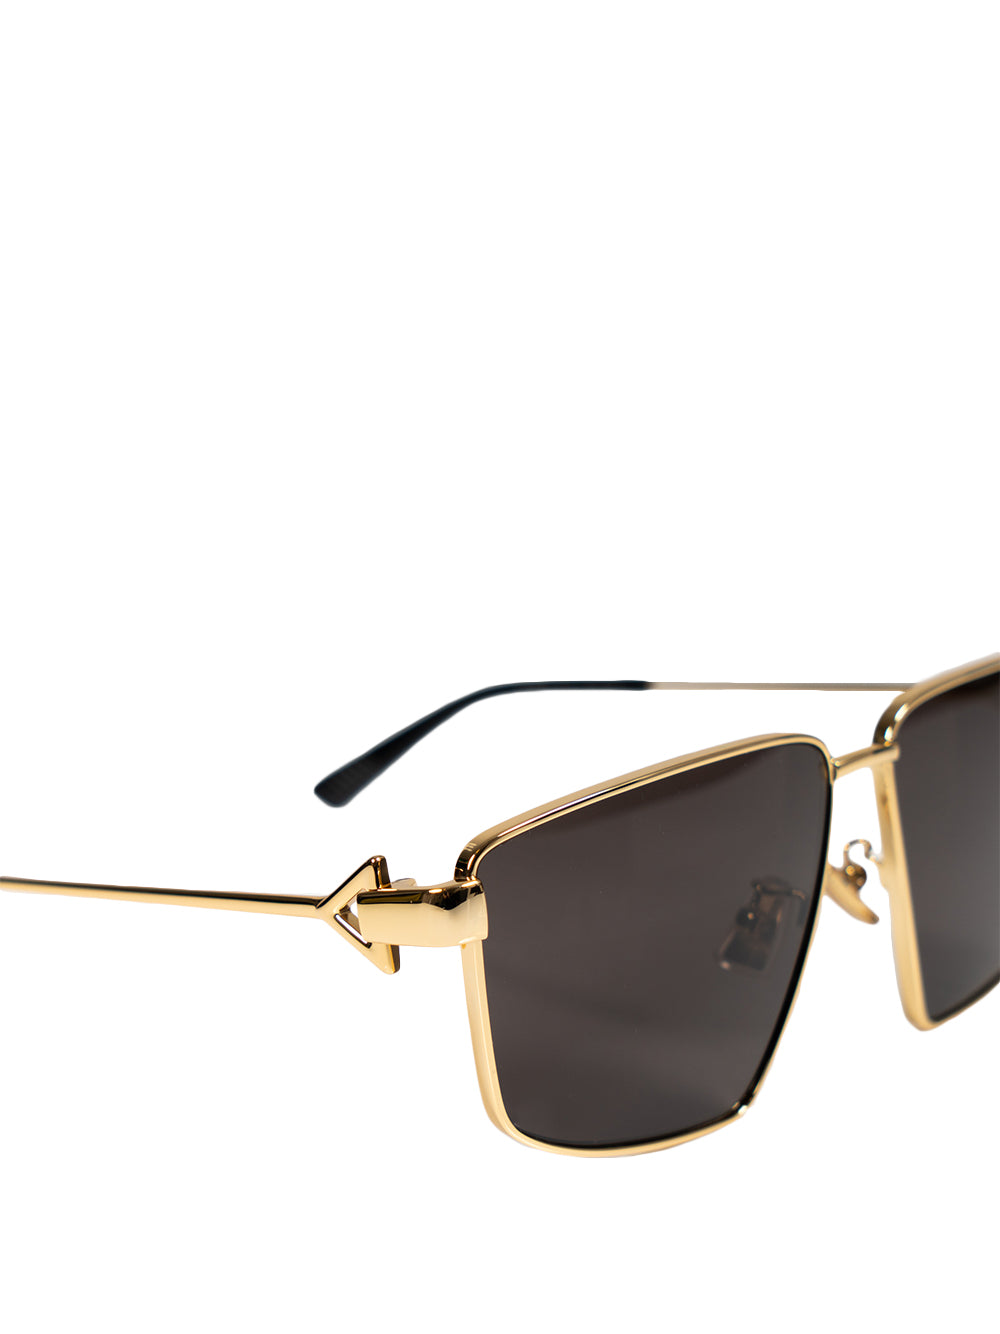 Square framed sunglasses